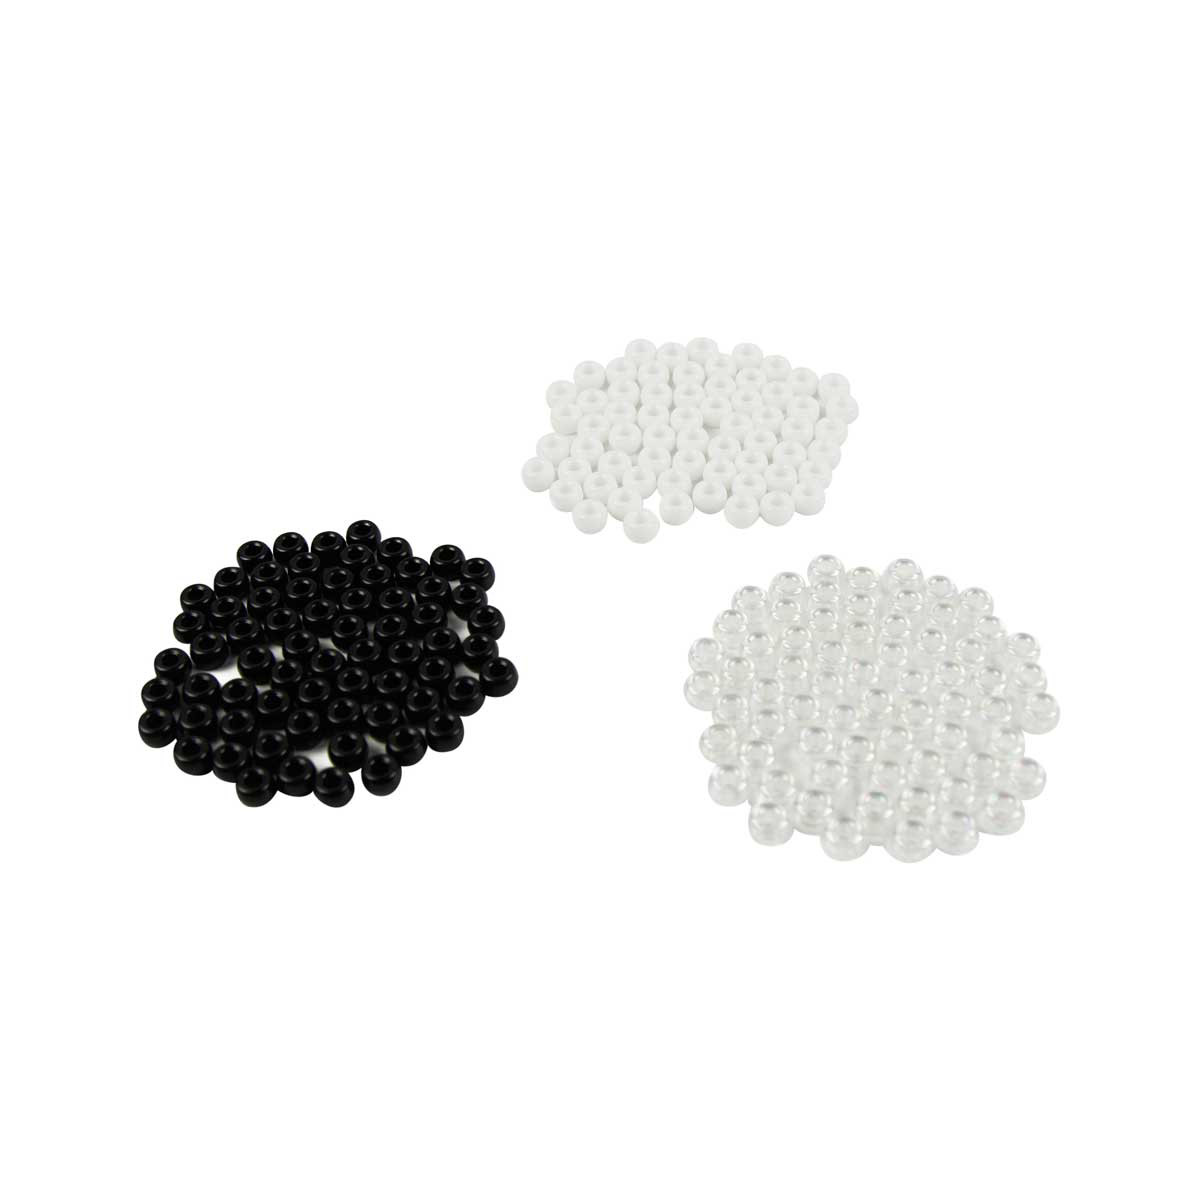 Make Shoppe Bright Pony Beads, 150 Pcs Black & White